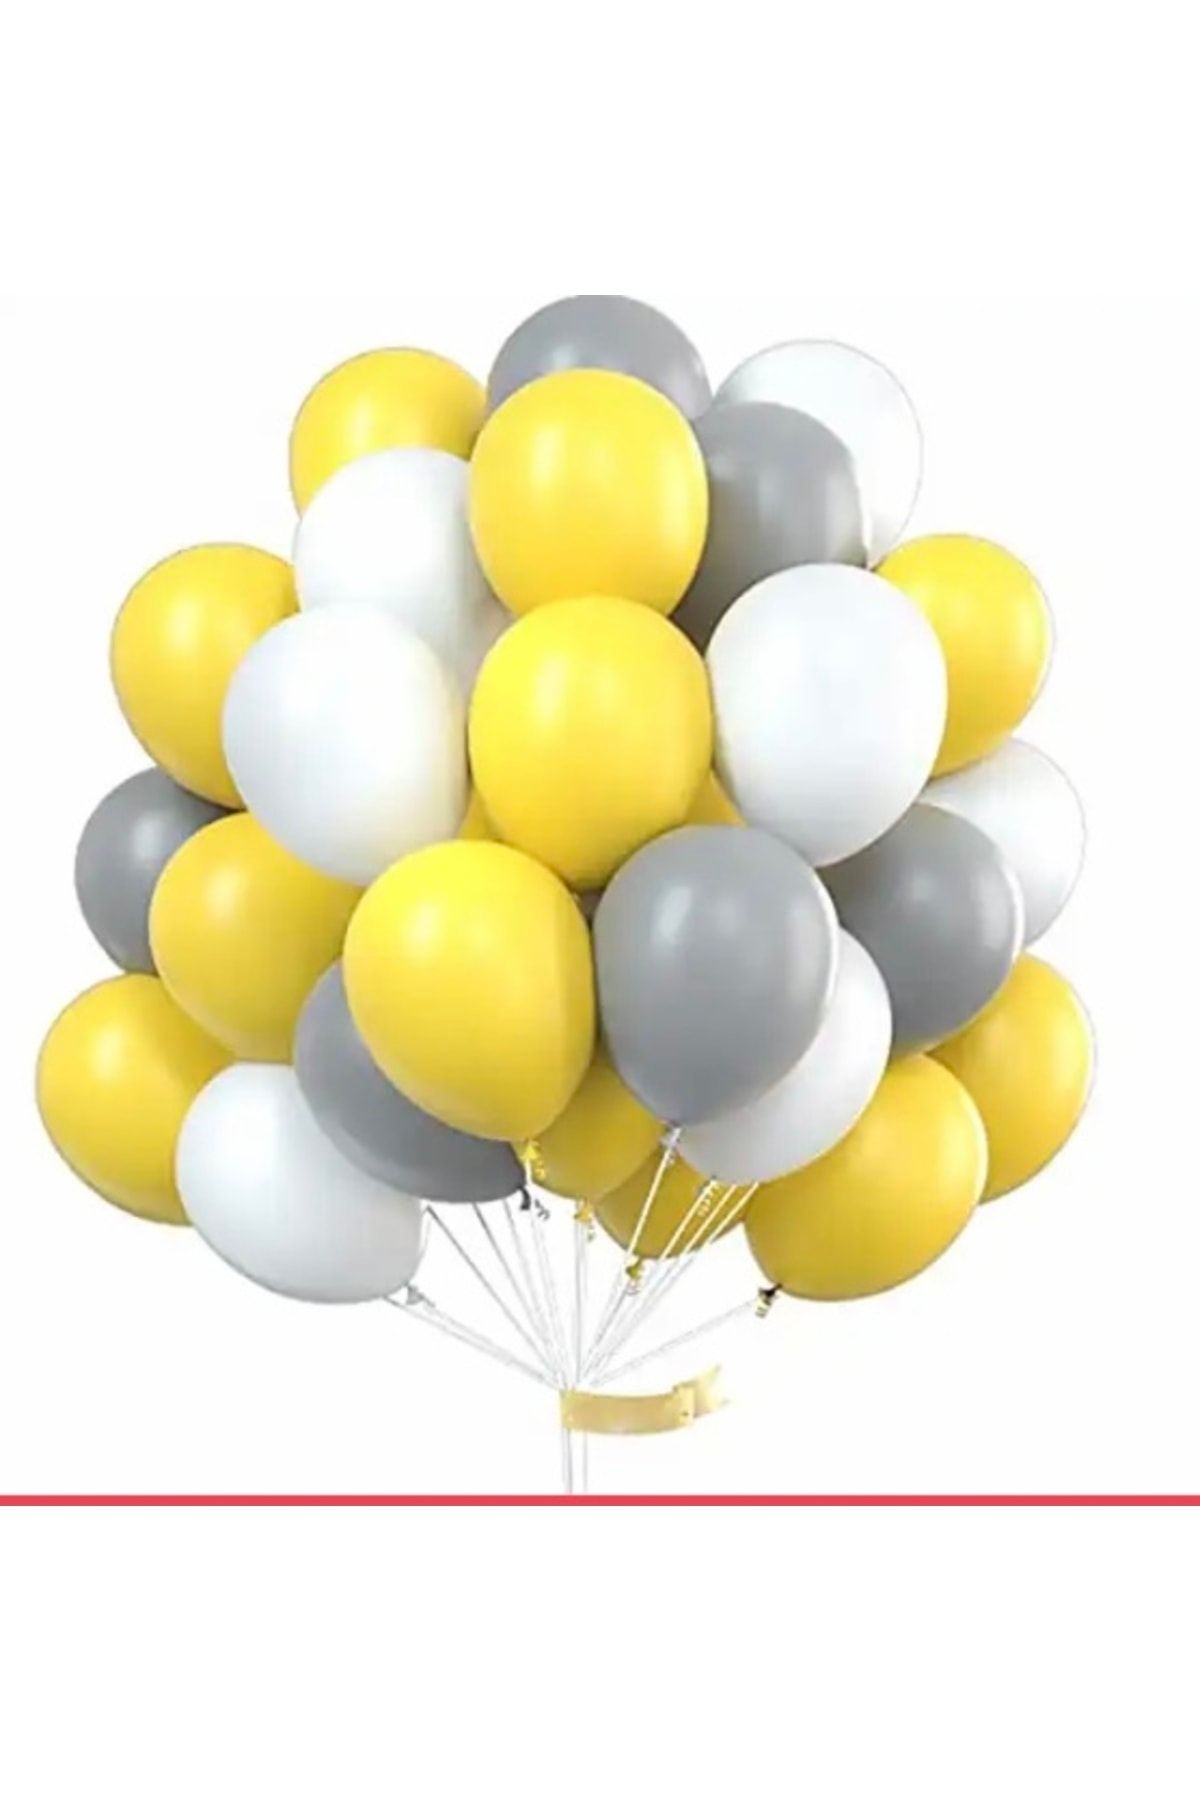 Deniz Party Store Pastel Sarı Gri Beyaz Balon Set 15 Adet